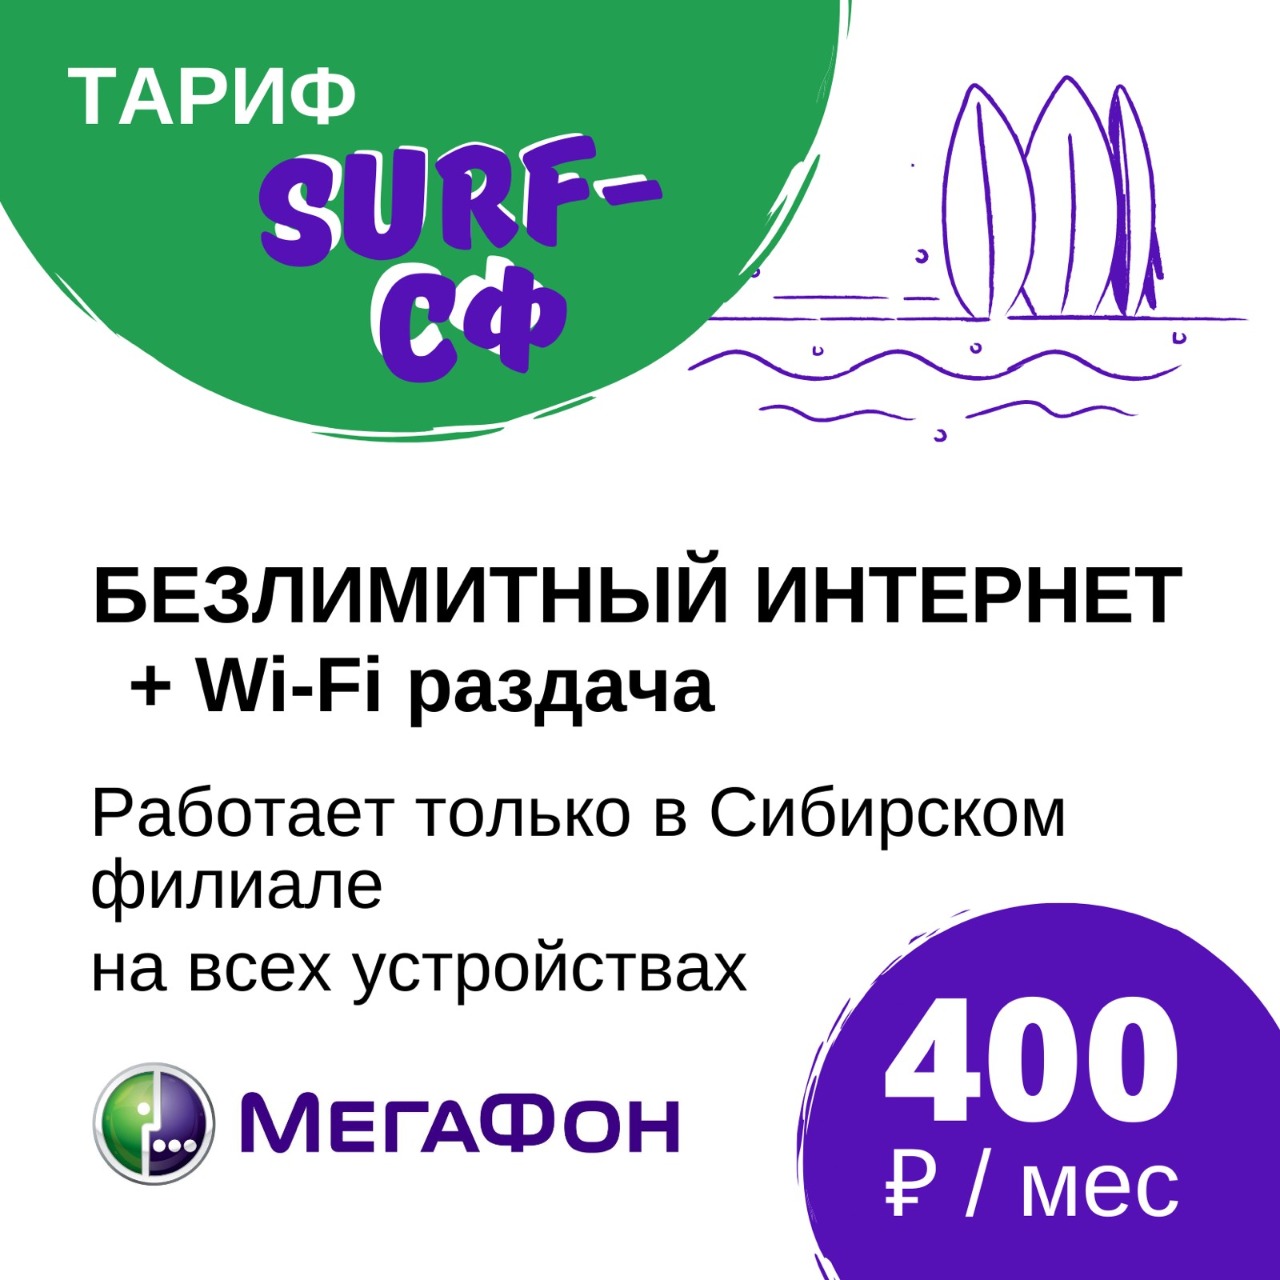 Саяногорск Инфо - whatsapp-image-2020-08-21-at-114743.jpeg, Скачано: 465